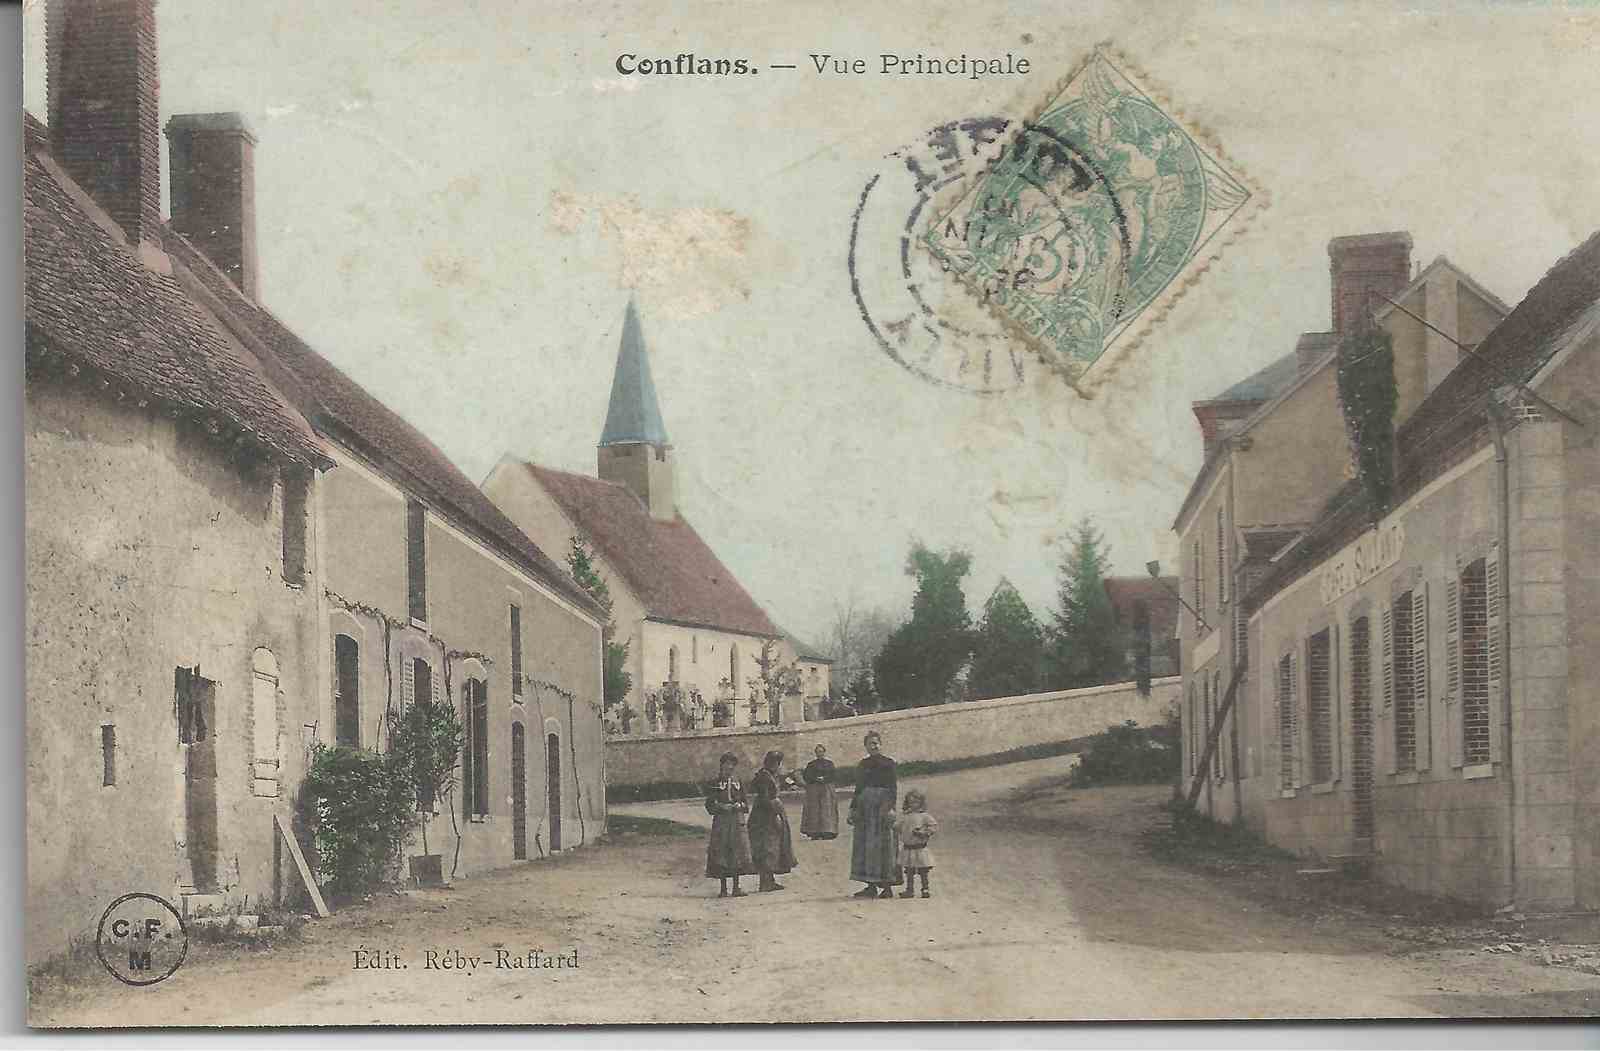 carte postale conflans1.jpg